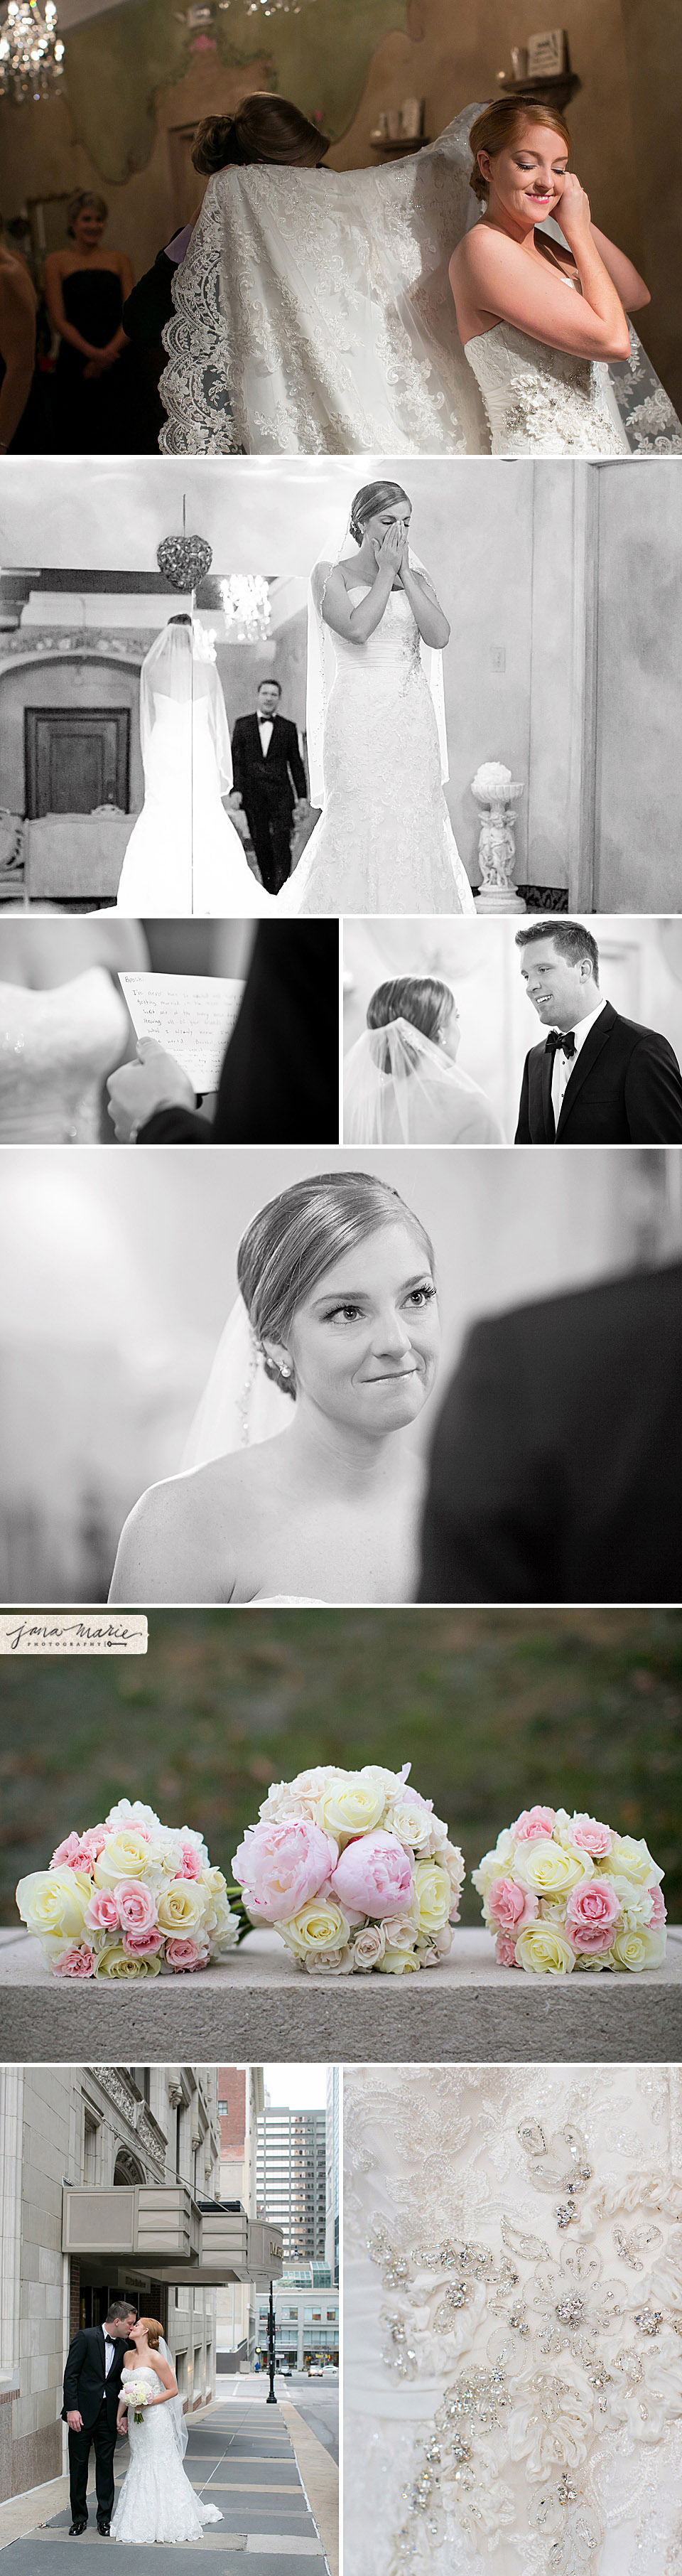 Steffon wedding, first site, black and white pictures, best kansas city wedding photographer, Jana Marler